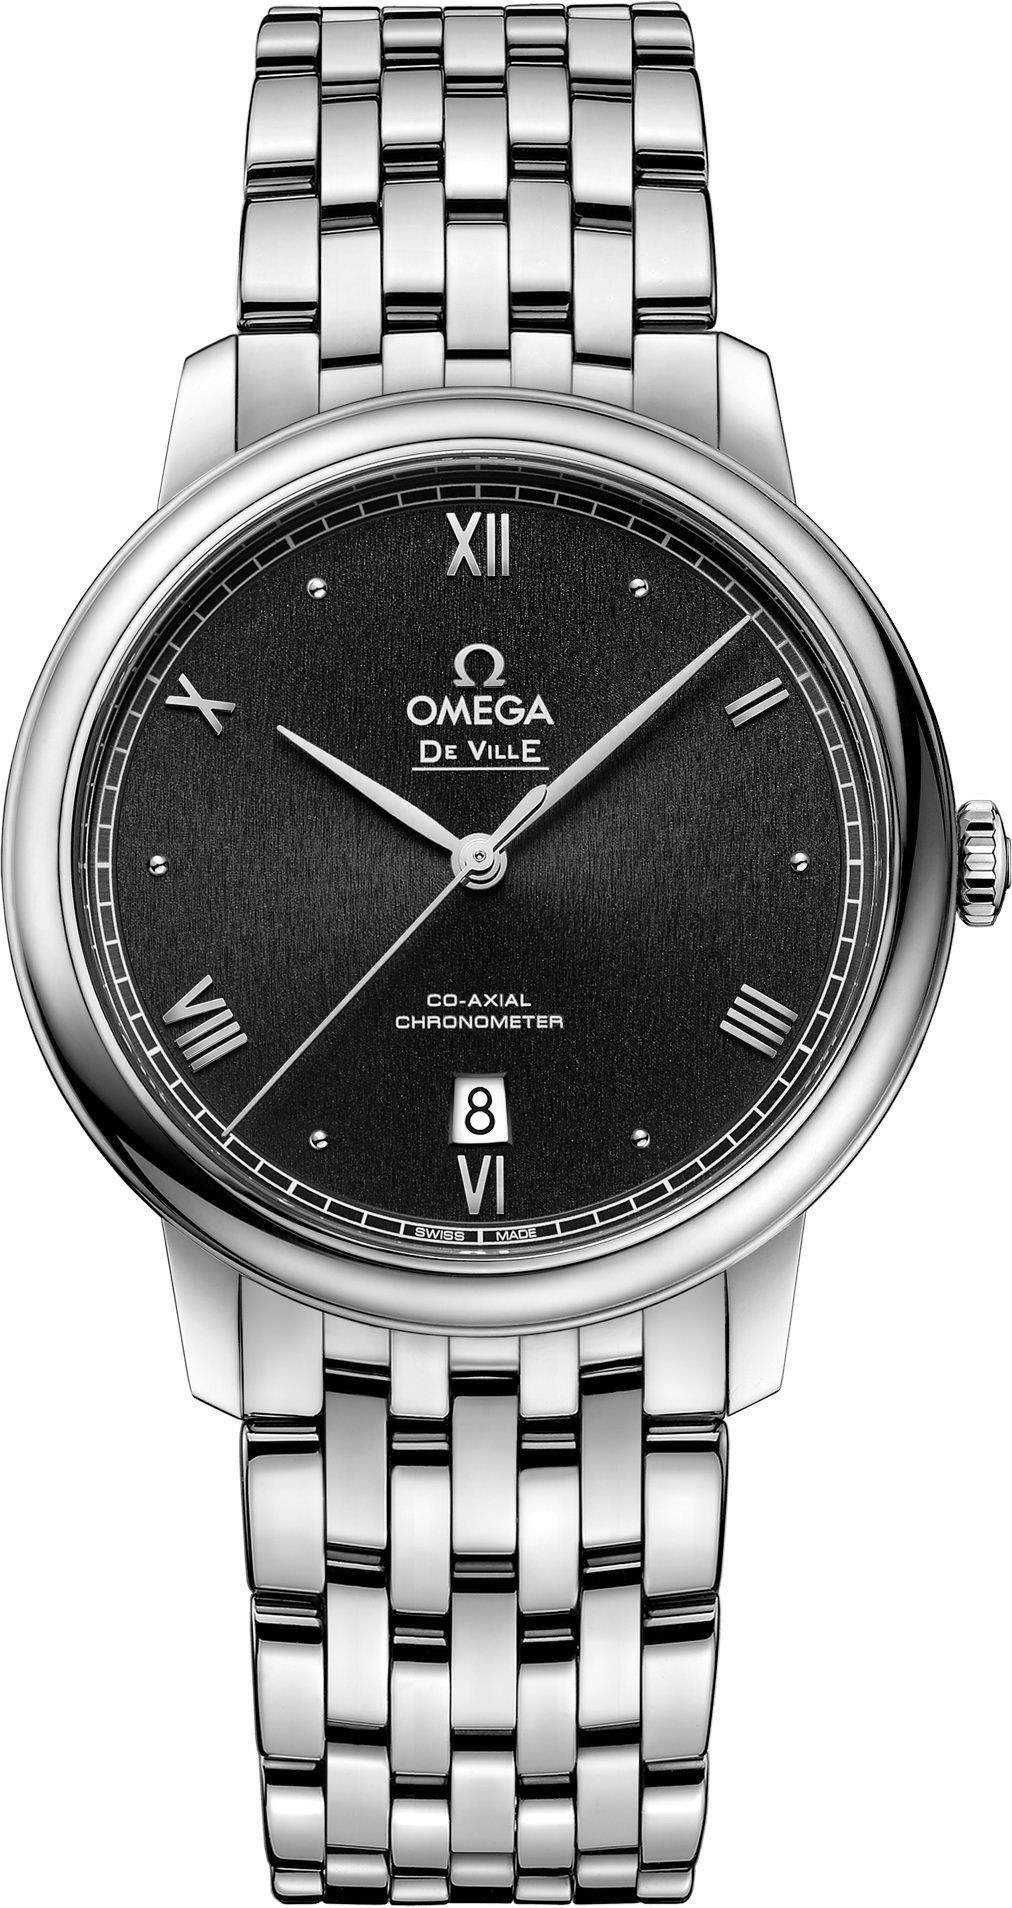 Omega De Ville Prestige Black Dial 39.5 mm Automatic Watch For Men - 1